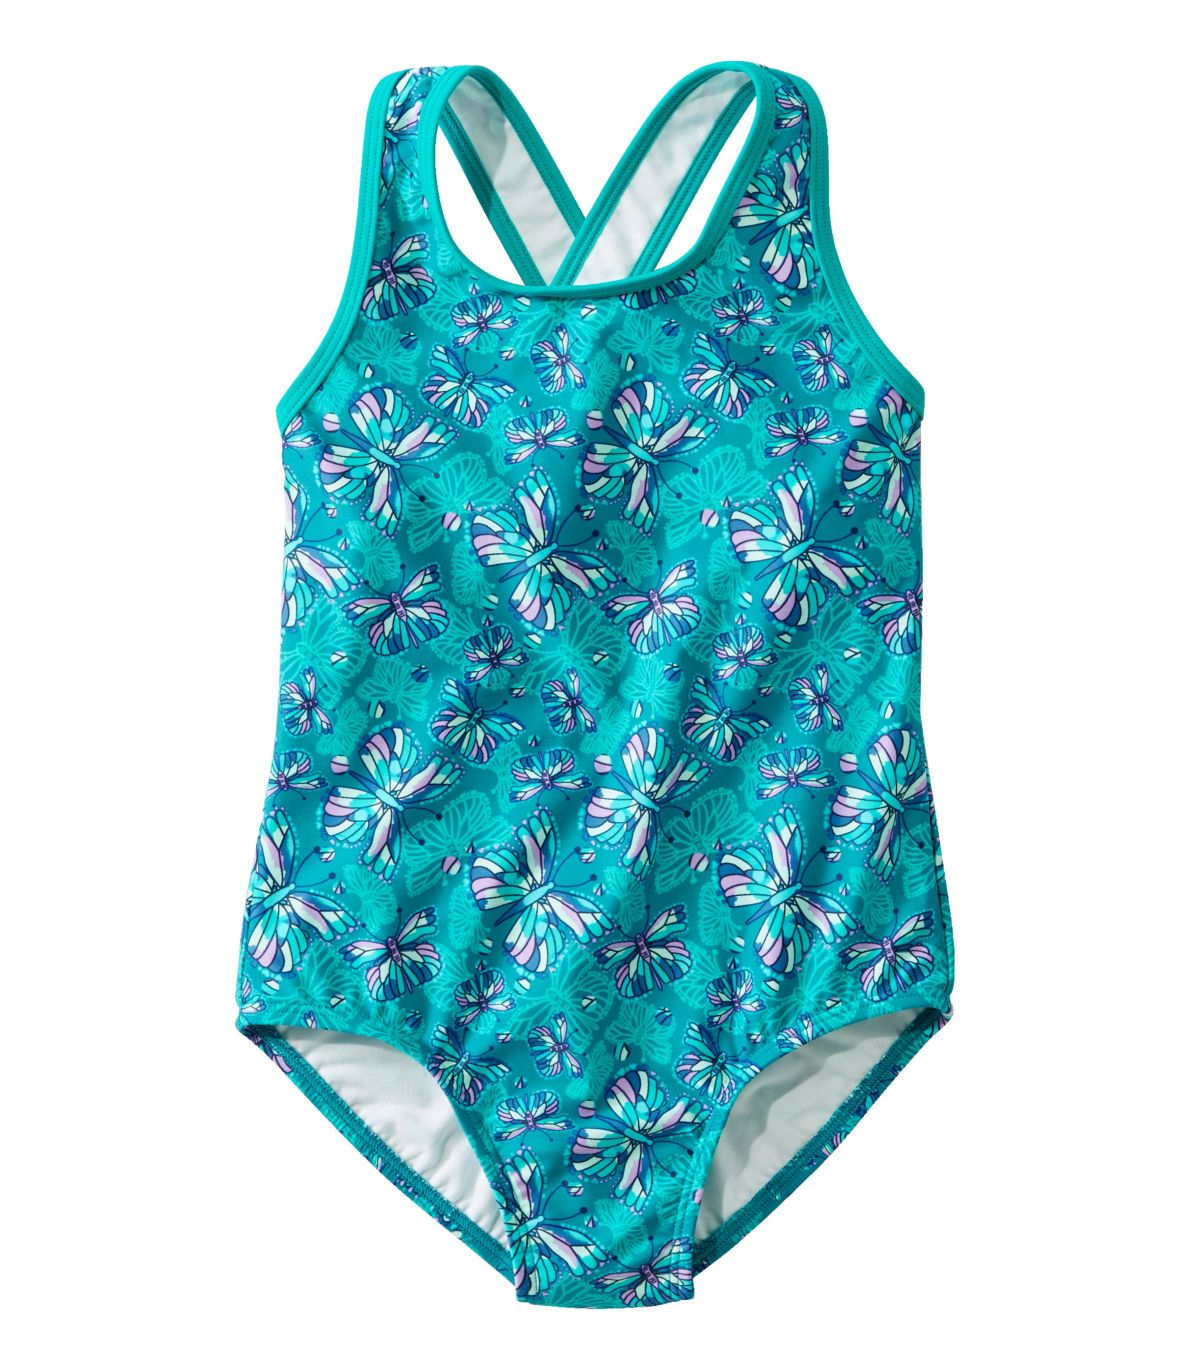 Girls' Watersports Swimwear, One-Piece